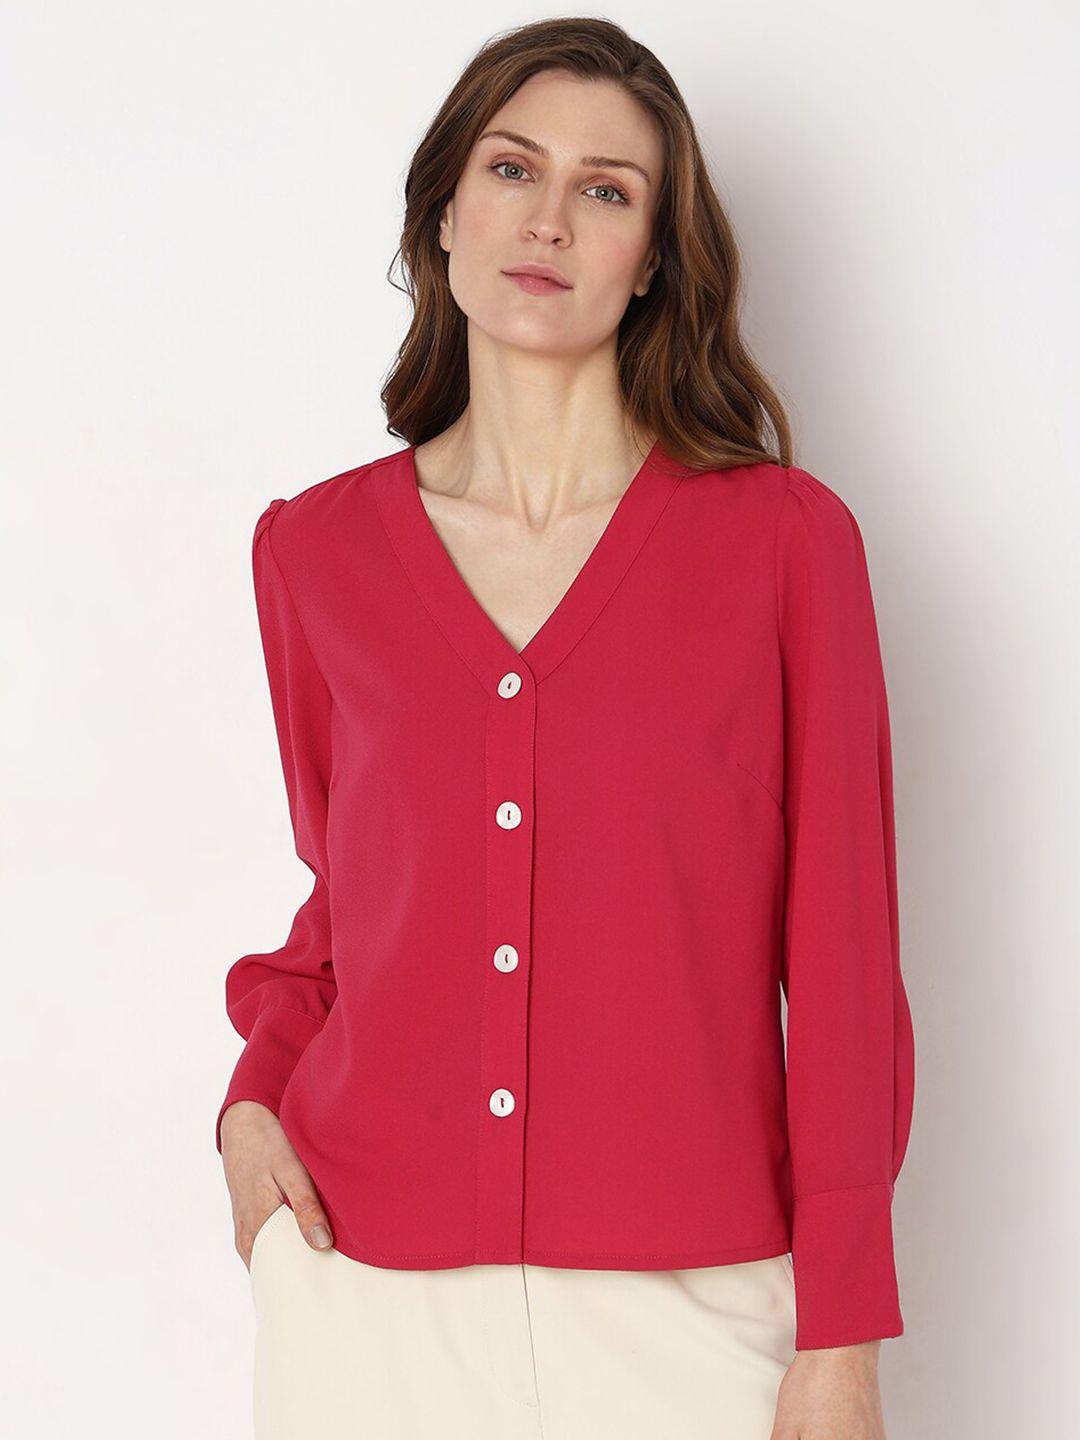 vero moda women red opaque casual shirt